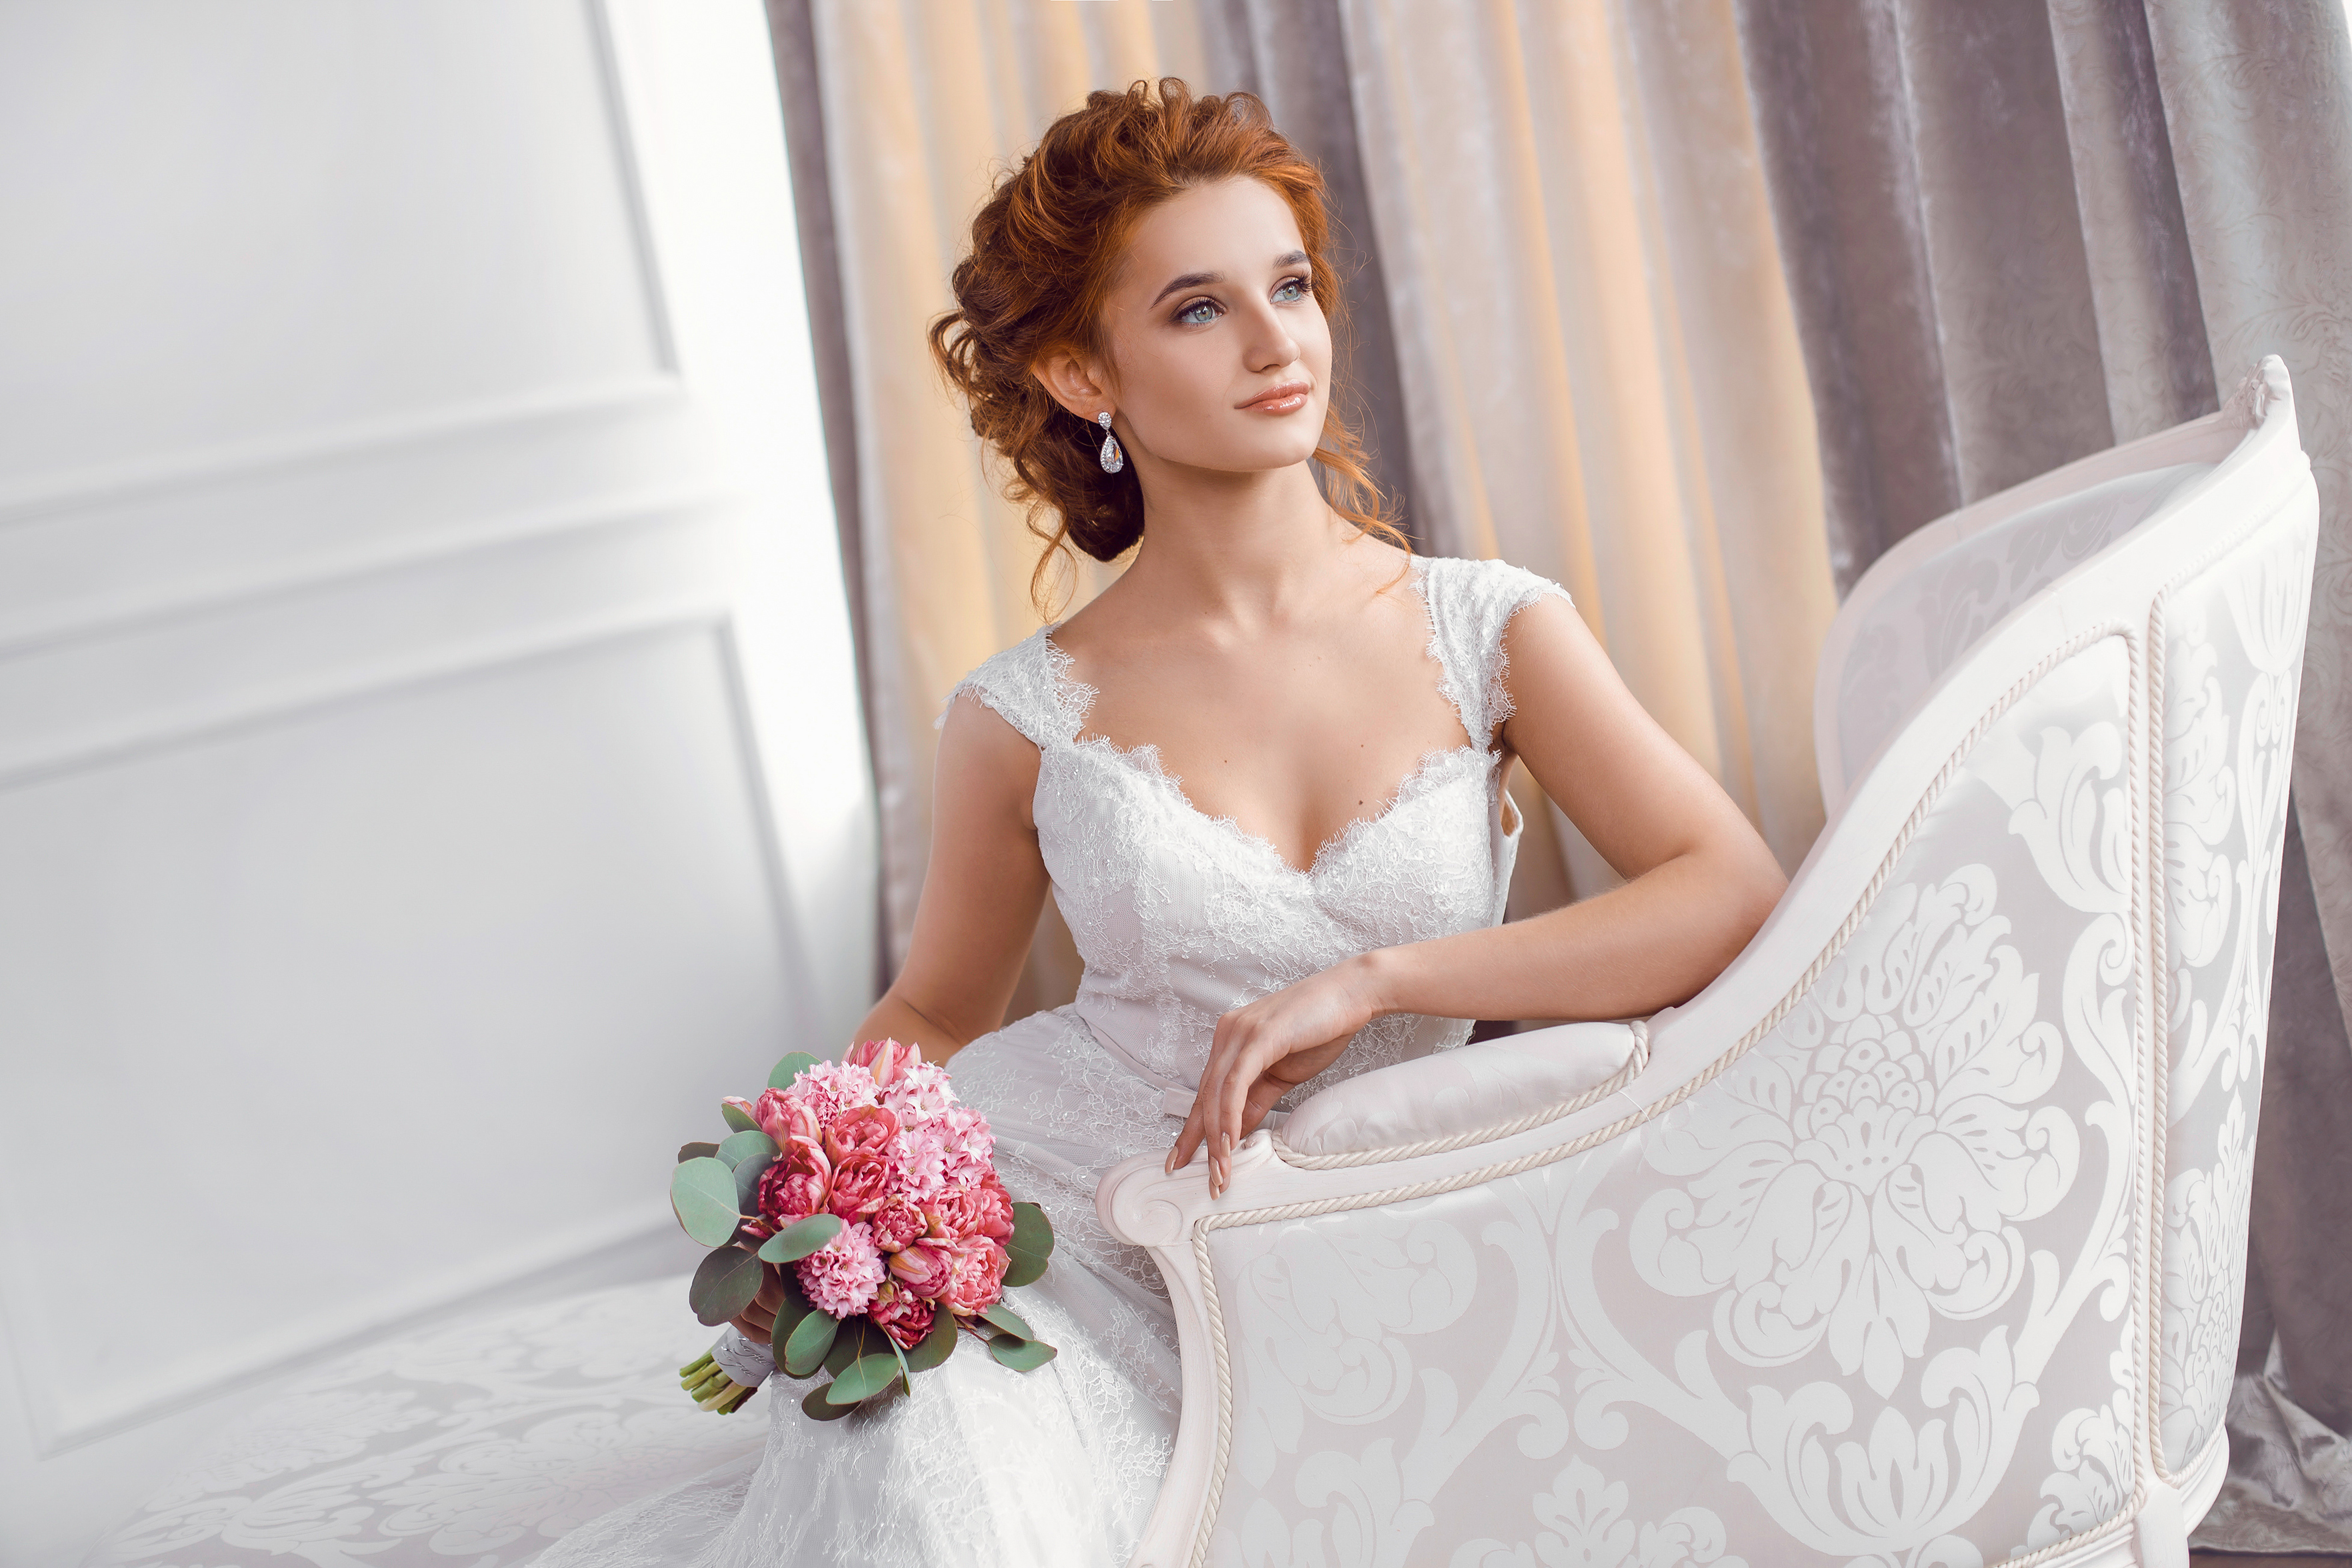 Blue Eyes Bouquet Bride Girl Model Redhead Wedding Dress White Dress Woman 3528x2352